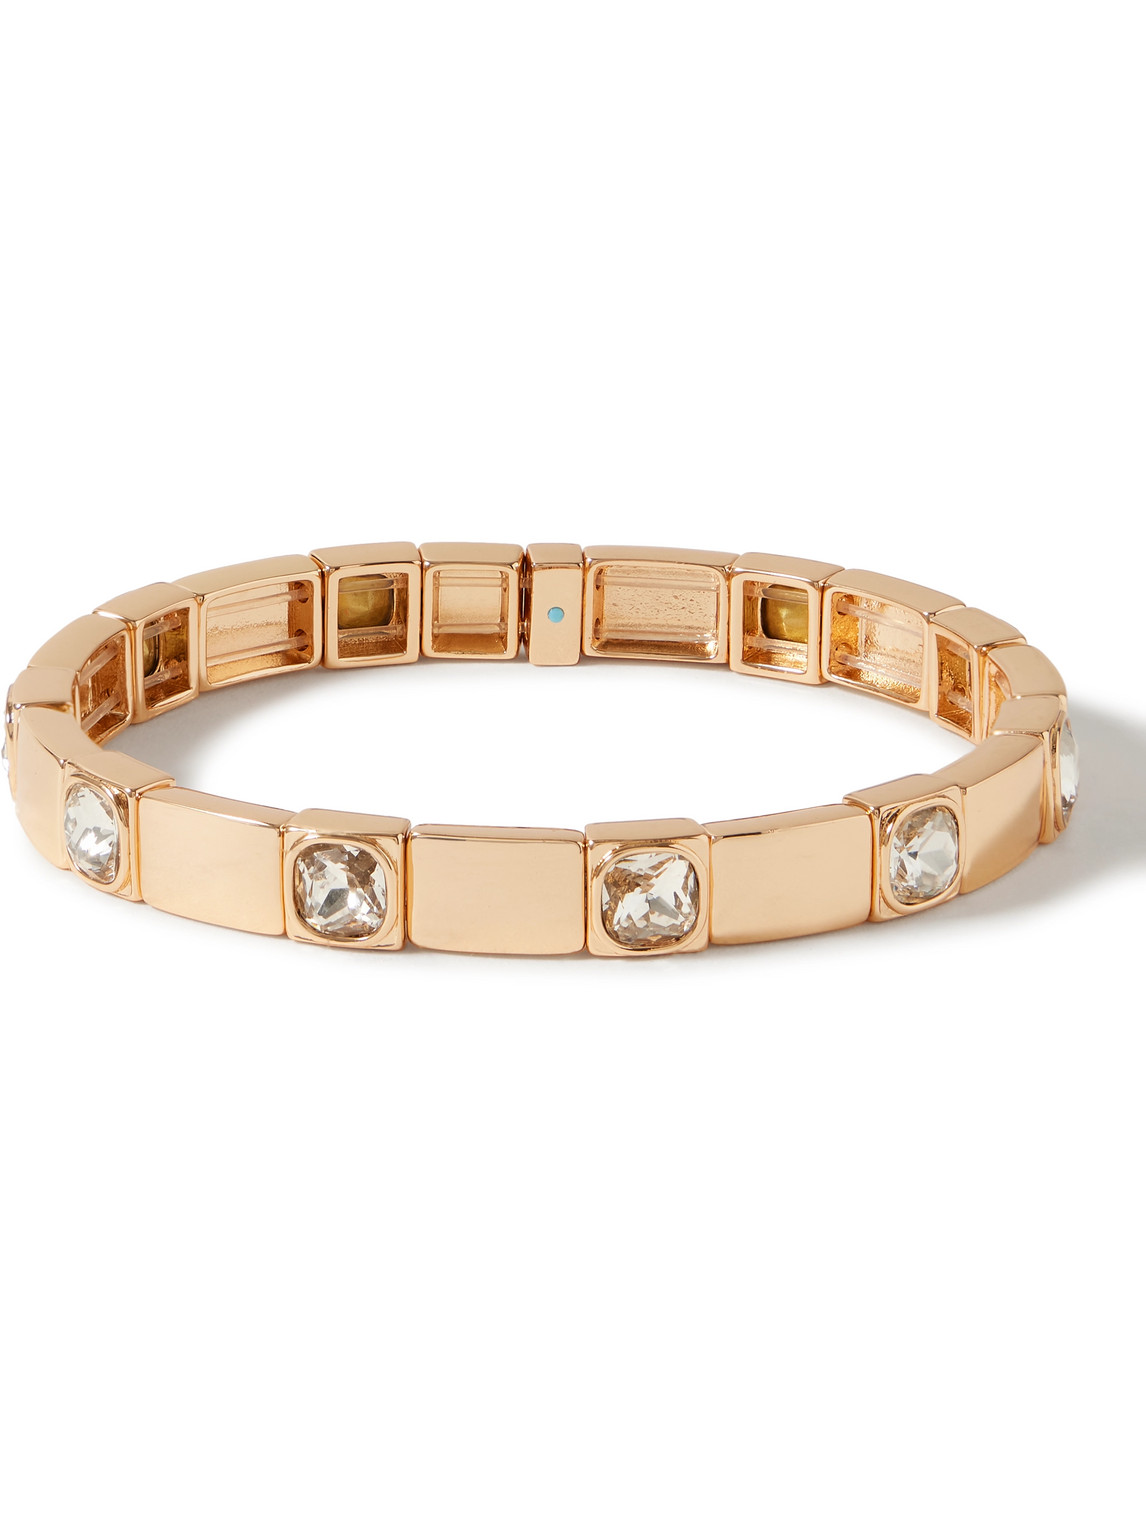 Roxanne Assoulin Gold-tone And Crystal Beaded Bracelet